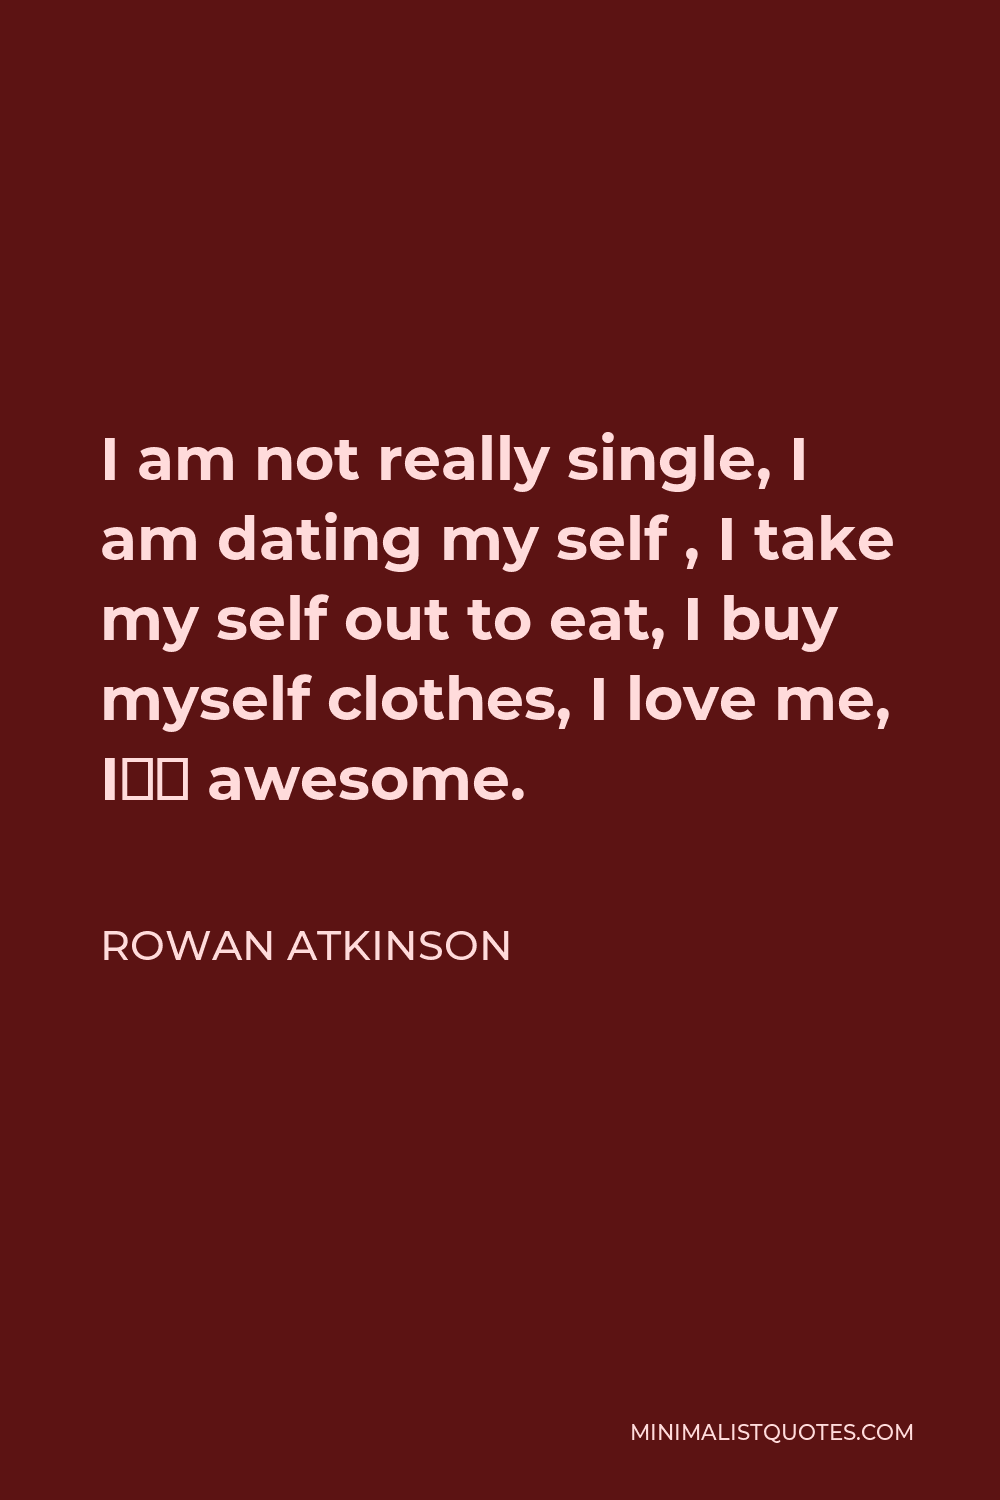 Rowan Atkinson Quote: I am not really single, I am dating my self ...